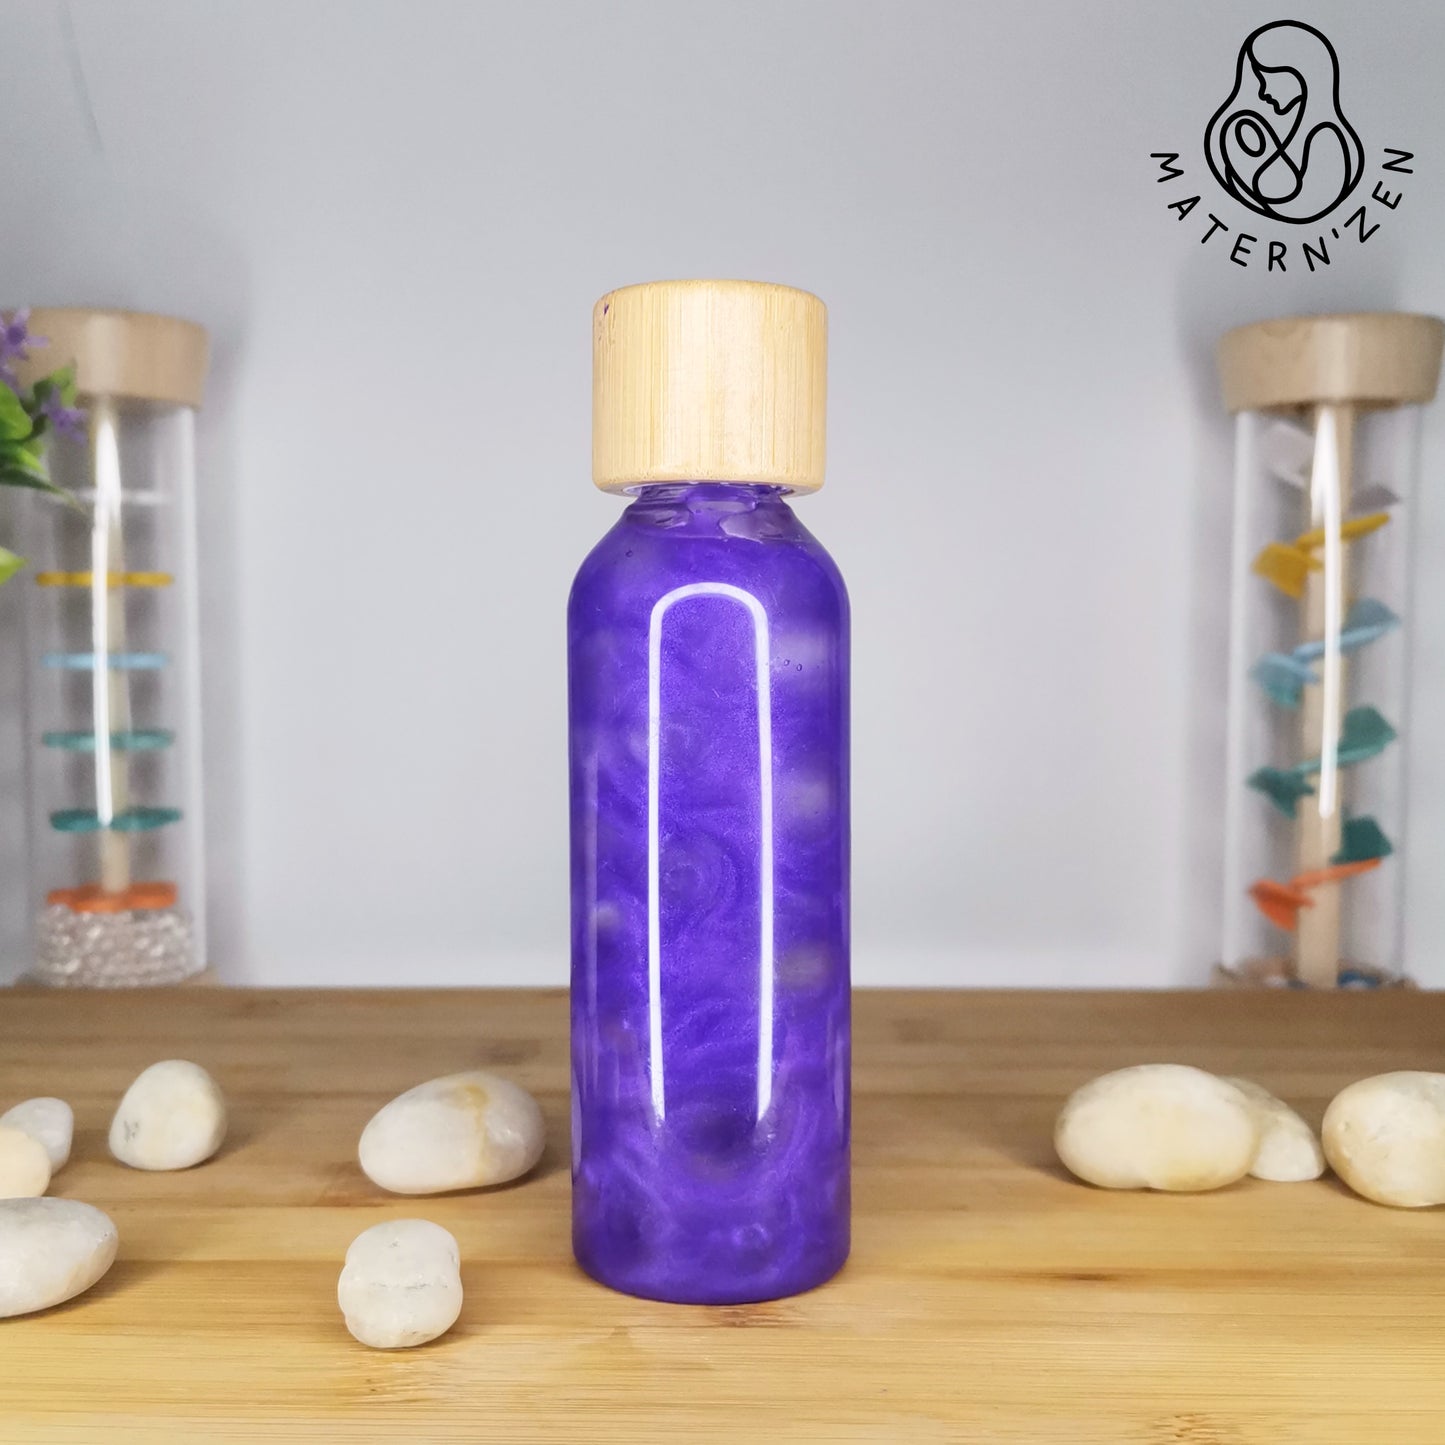 Orbeez Mágicos liquid sensory bottle 